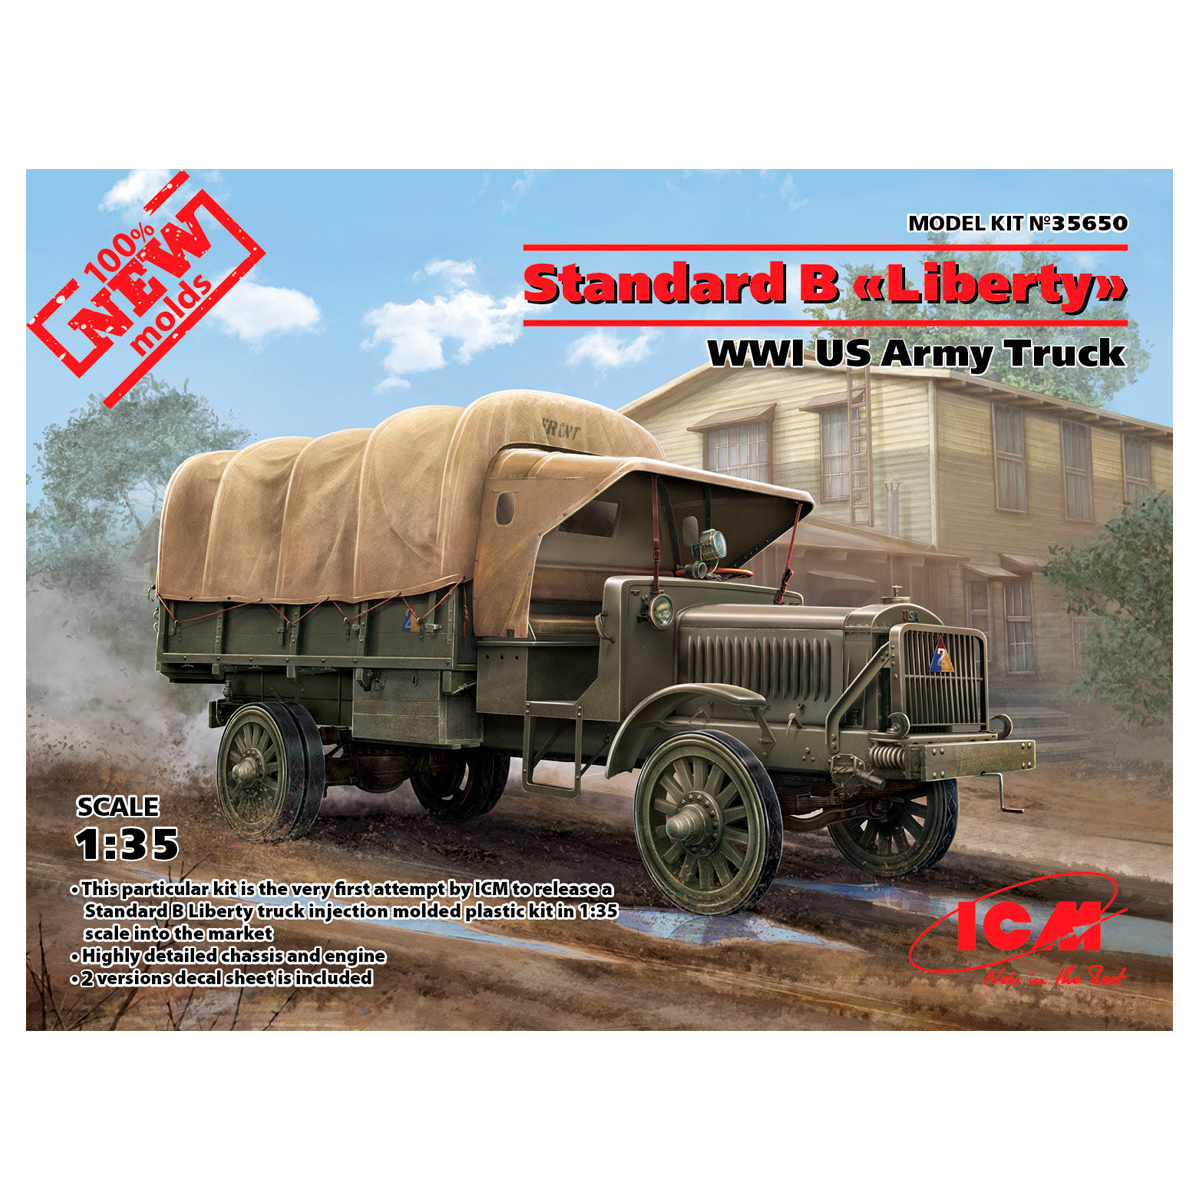 Standard B Liberty, WWI US Army Truck (100% new molds) 1/35